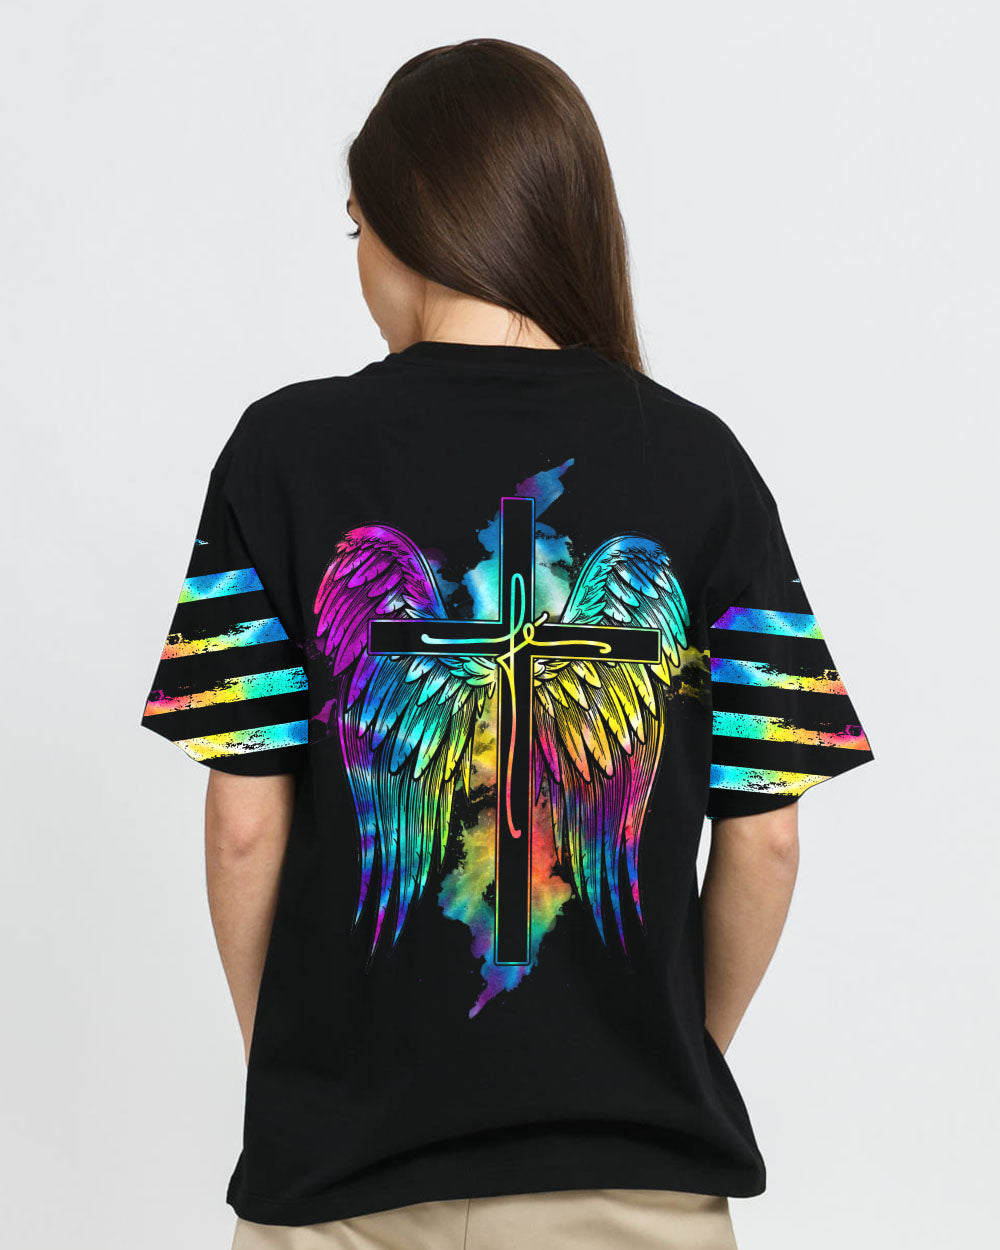 Fe' Cross Wings Colorful Watercolor Women's Christian Tshirt